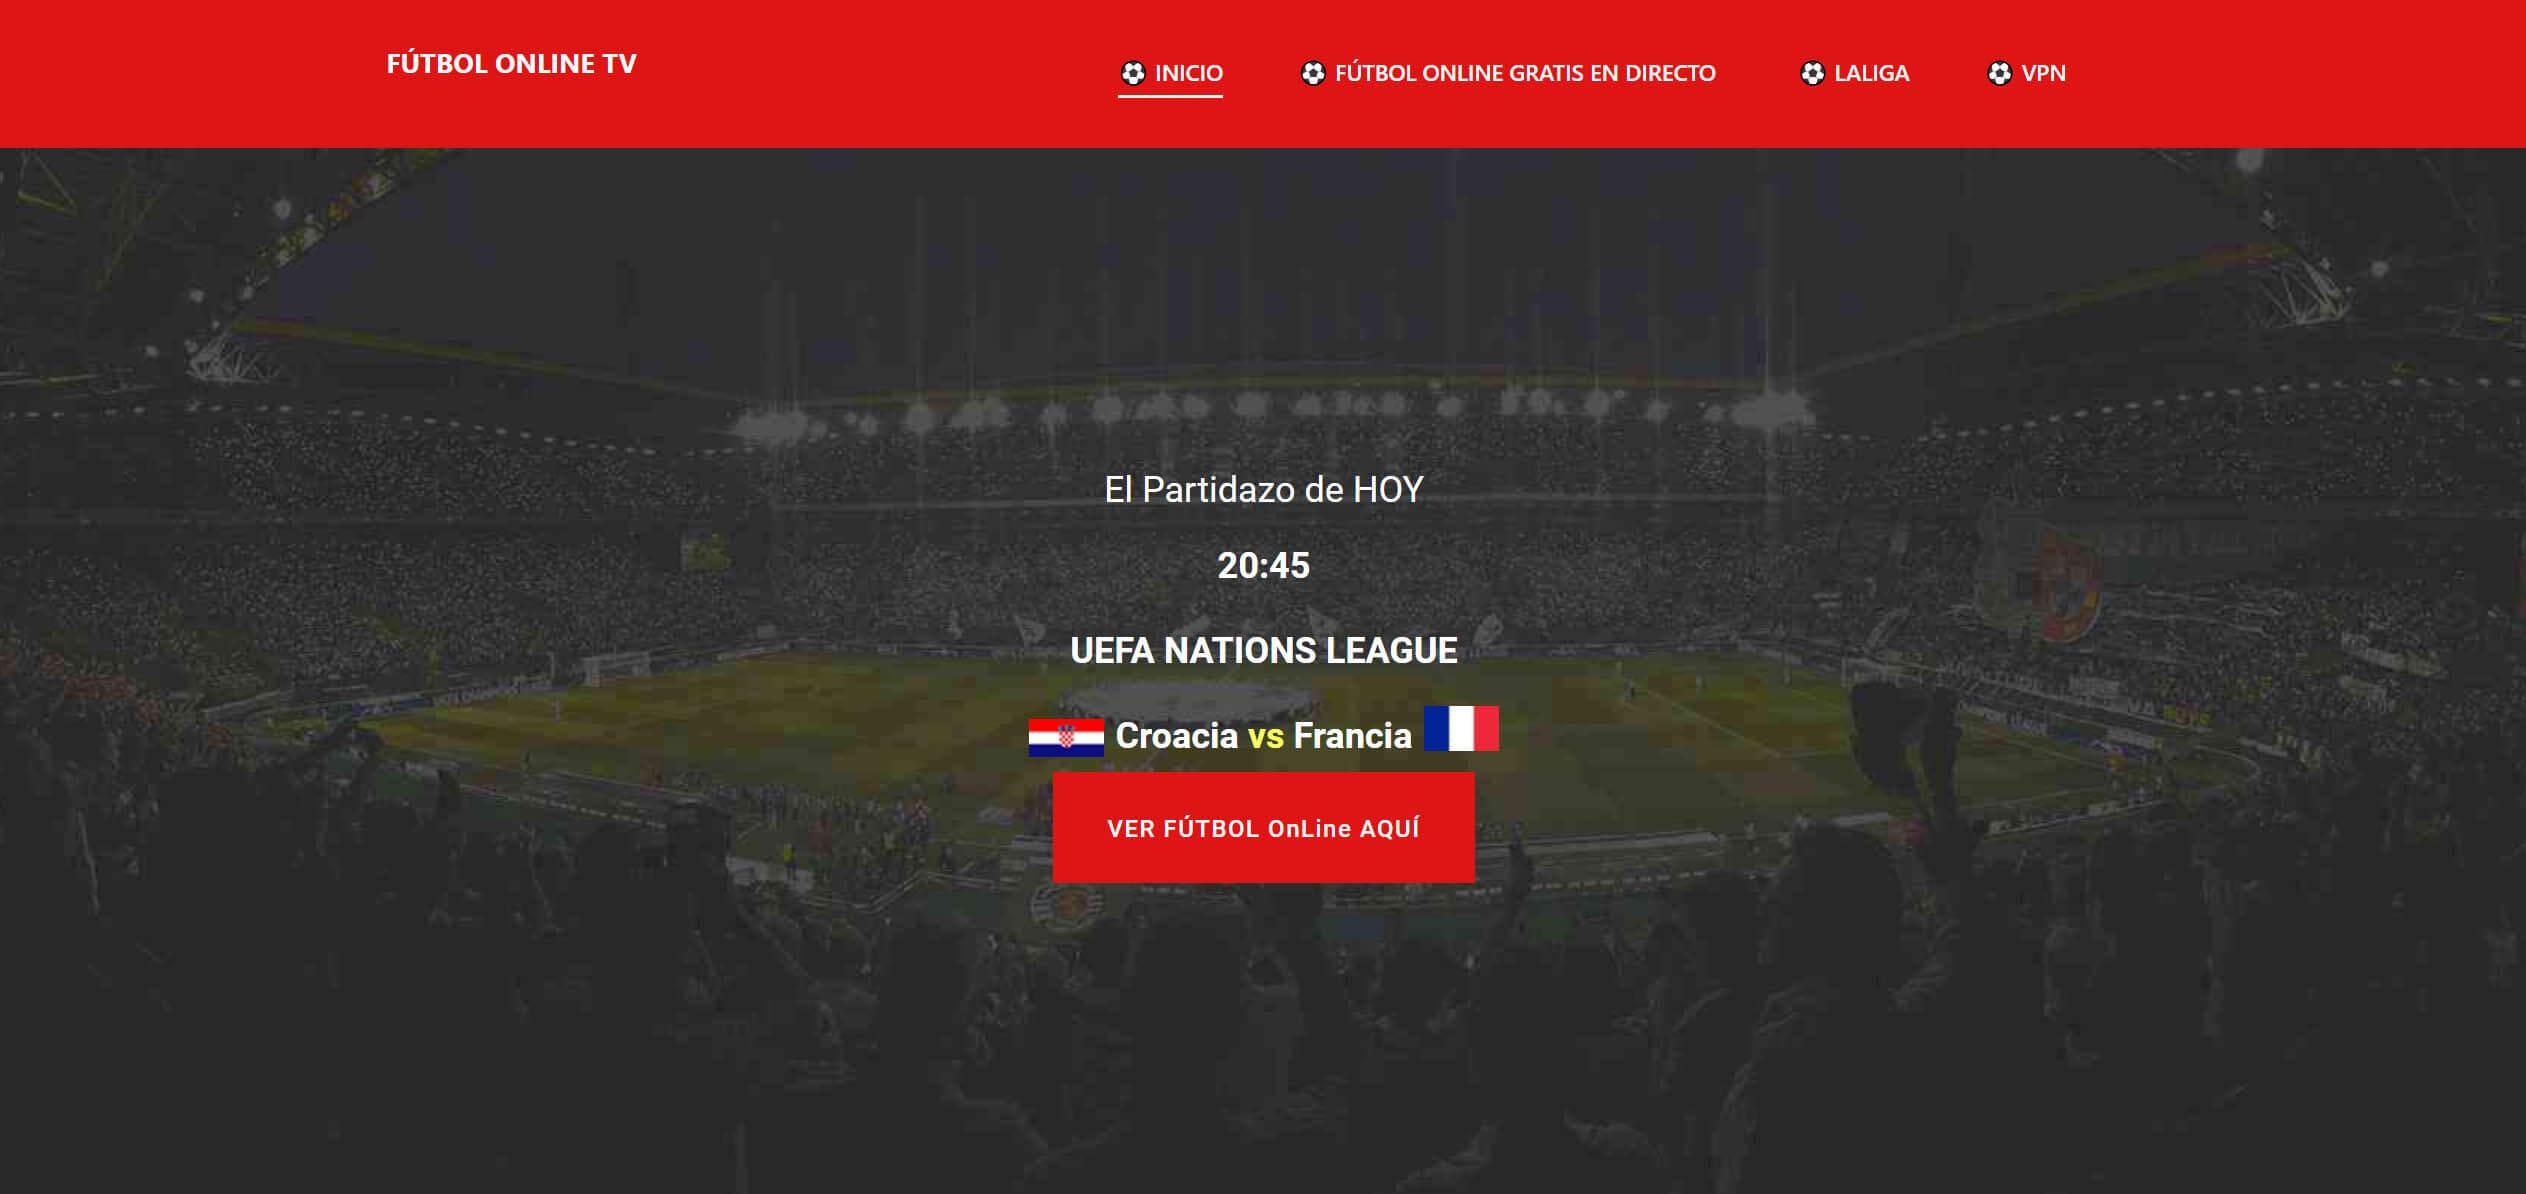 Futbol online gratis en vivo por internet